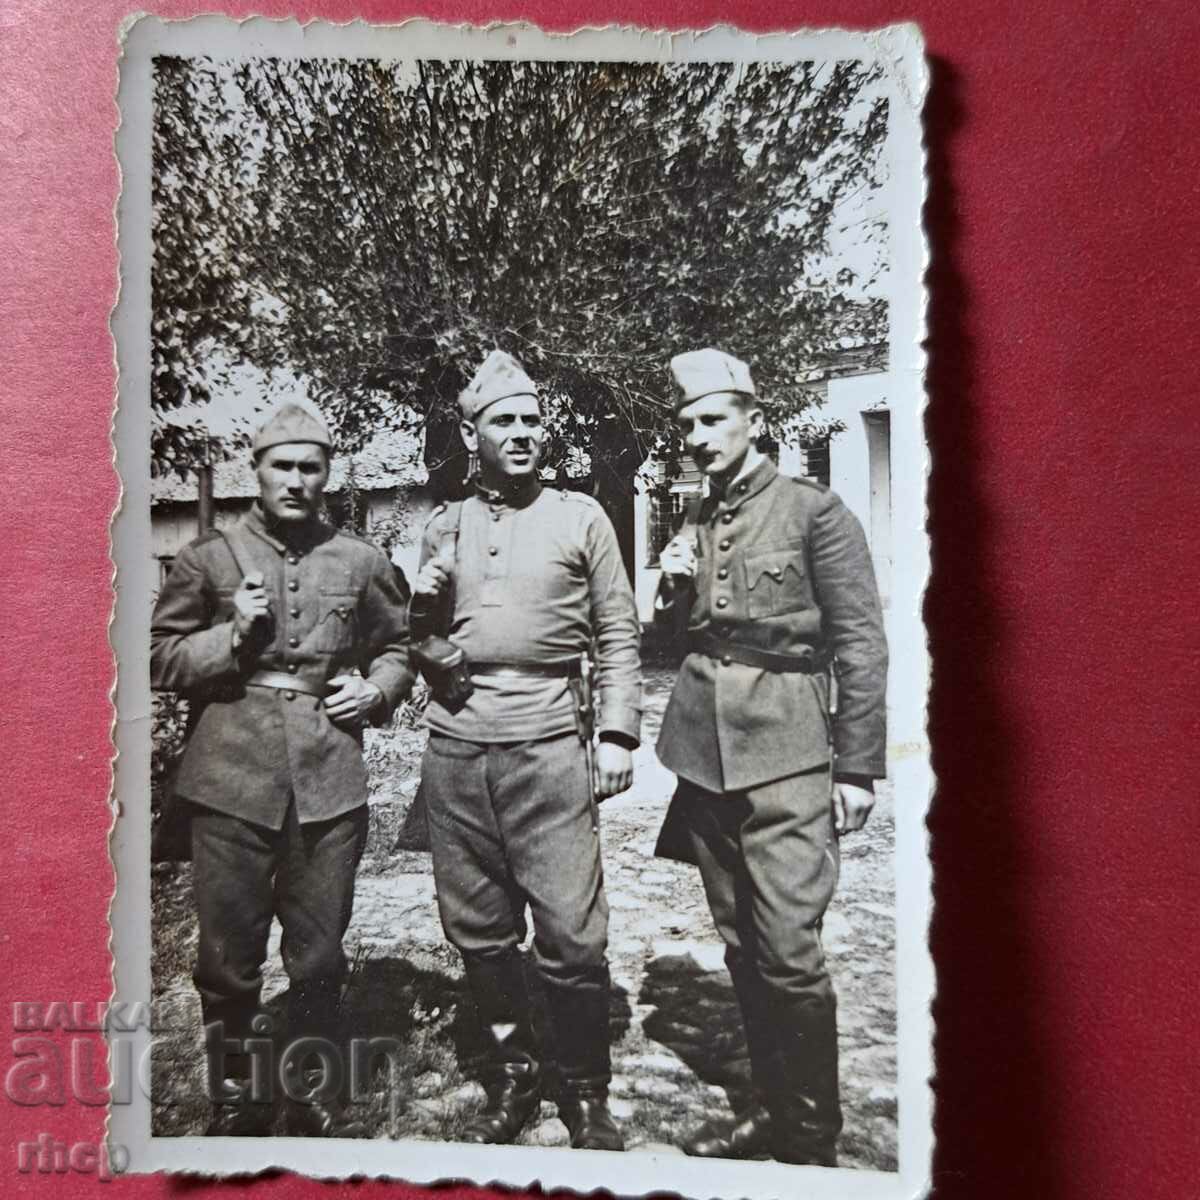 Gyumurjina Βούλγαροι στρατιώτες Σεπτέμβριος 1941 κατάληψη